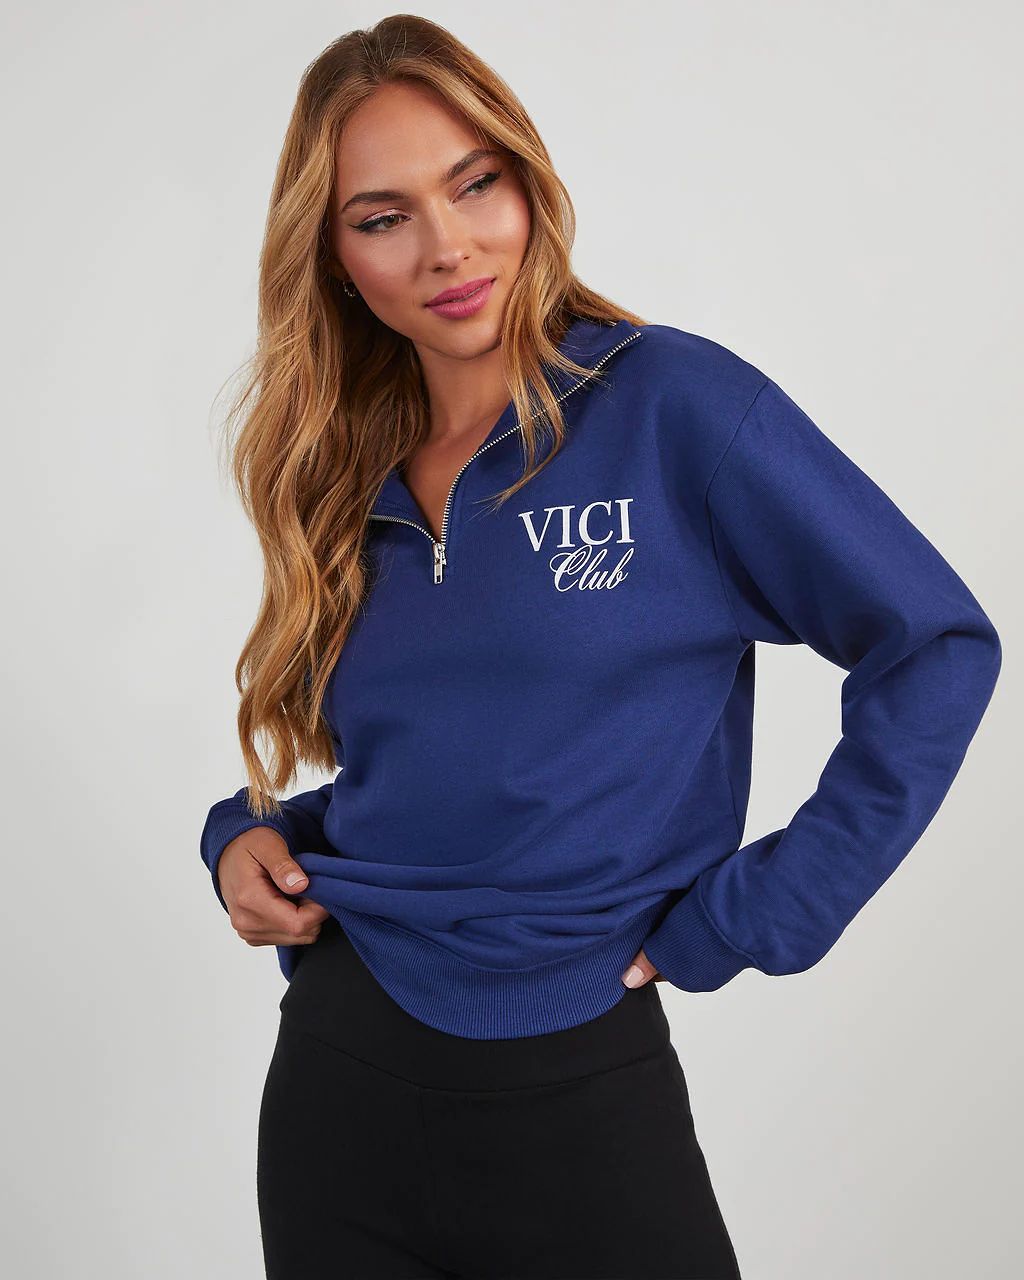 Vici Club Quarter Zip Sweatshirt | VICI Collection